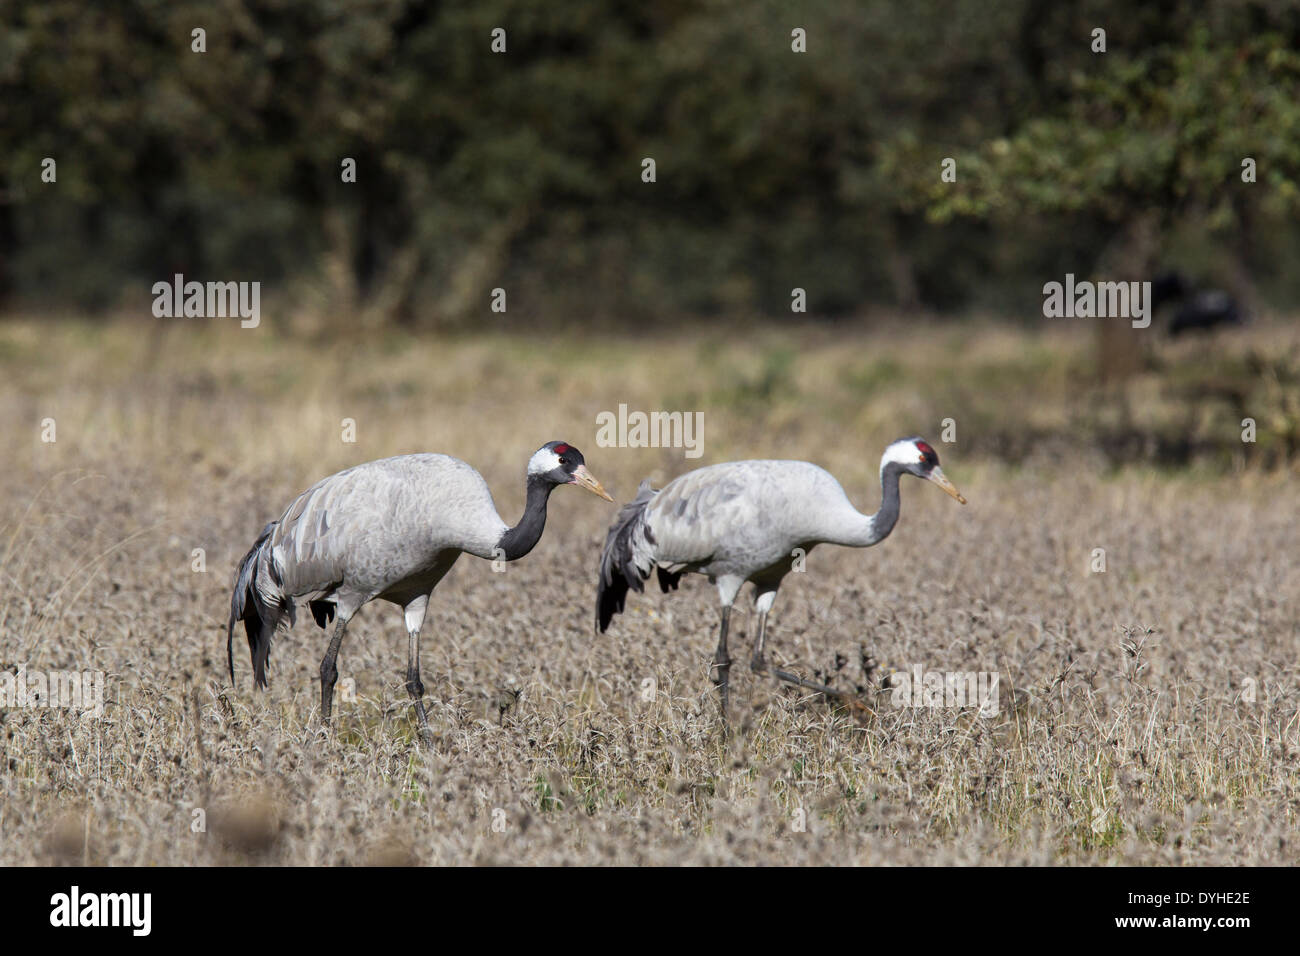 Common Crane, Eurasian Crane, Grus grus, Kranich, Extremadura, Spain, pair walking in dehesa with oak trees Stock Photo